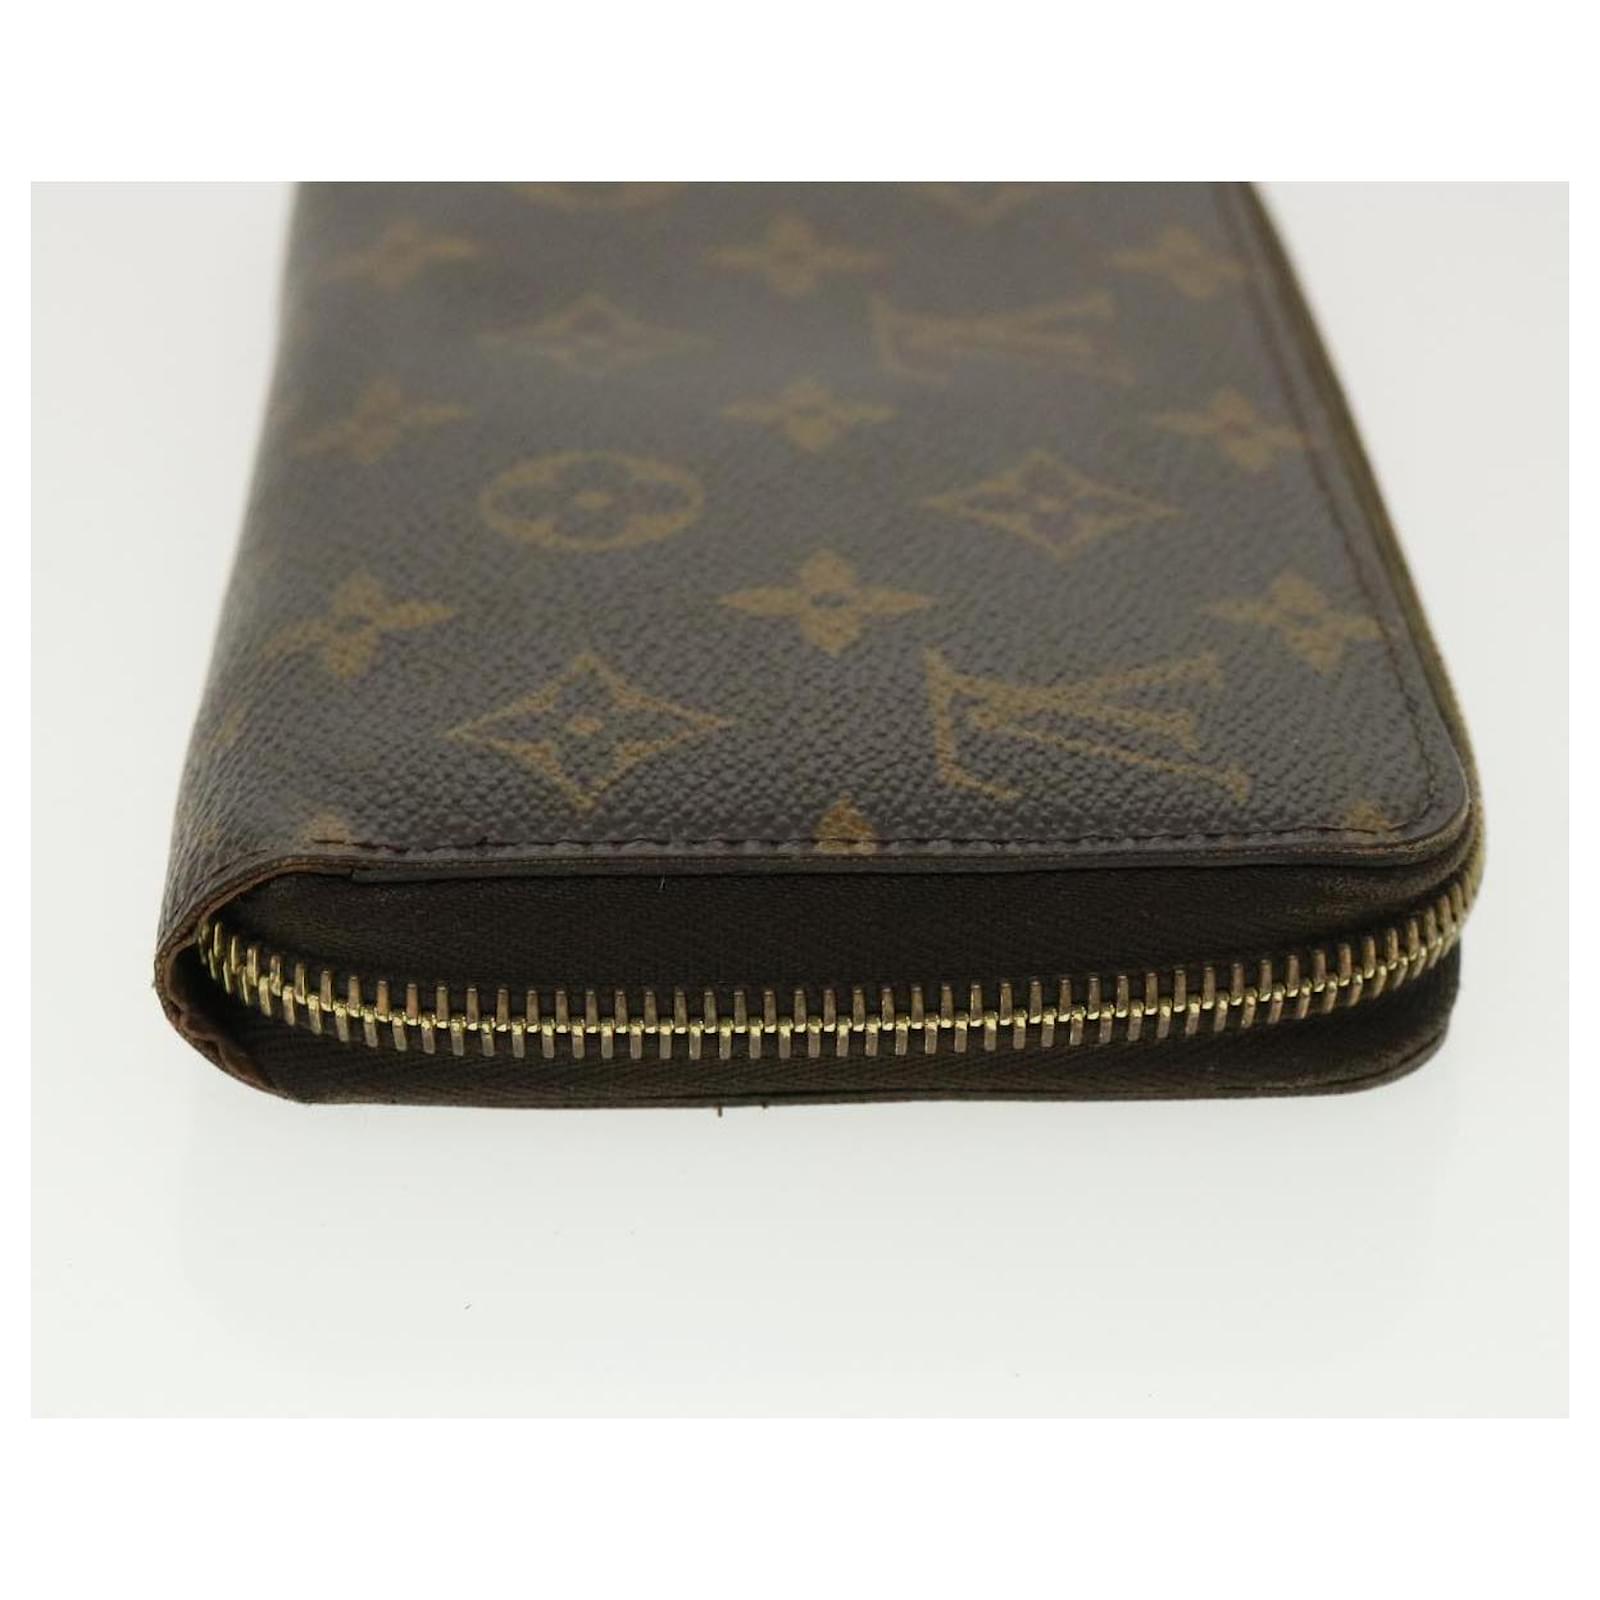 Louis Vuitton M42616 Zippy Wallet Monogram Brown